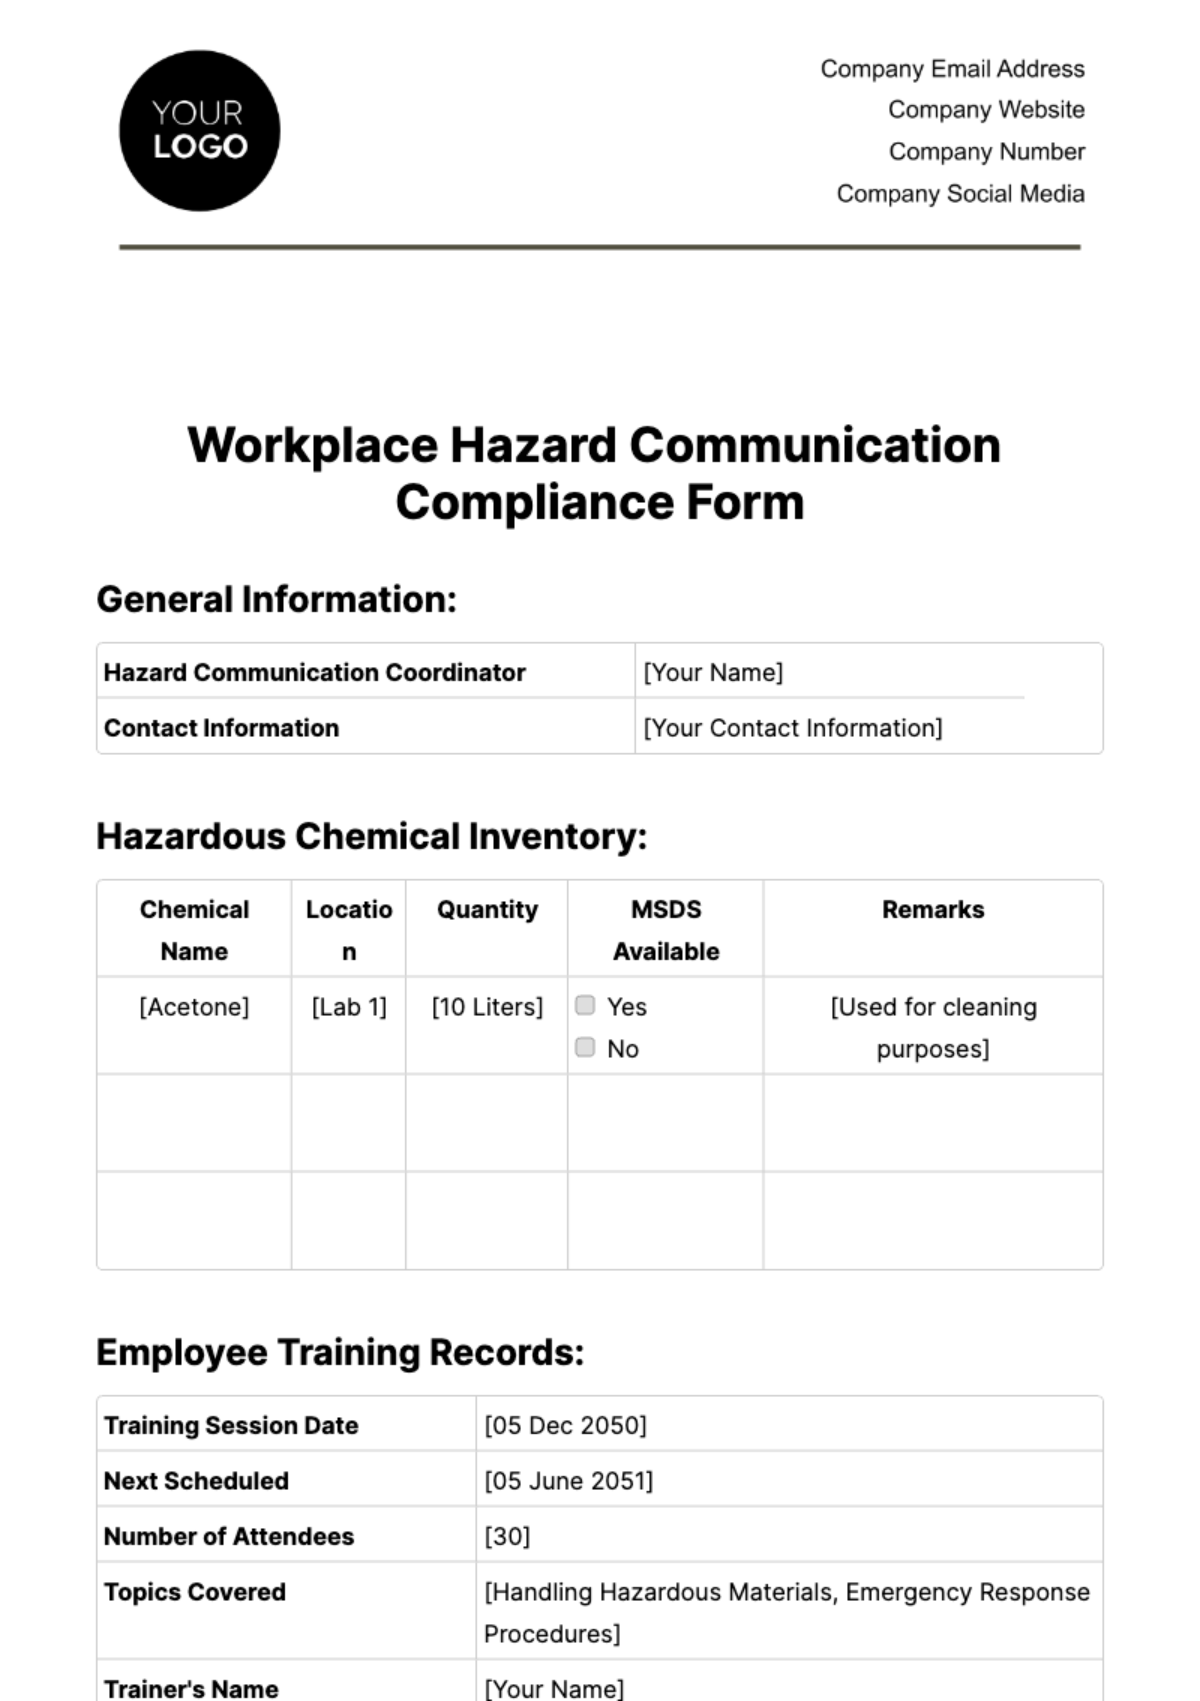 Free Workplace Hazard Communication Compliance Form Template